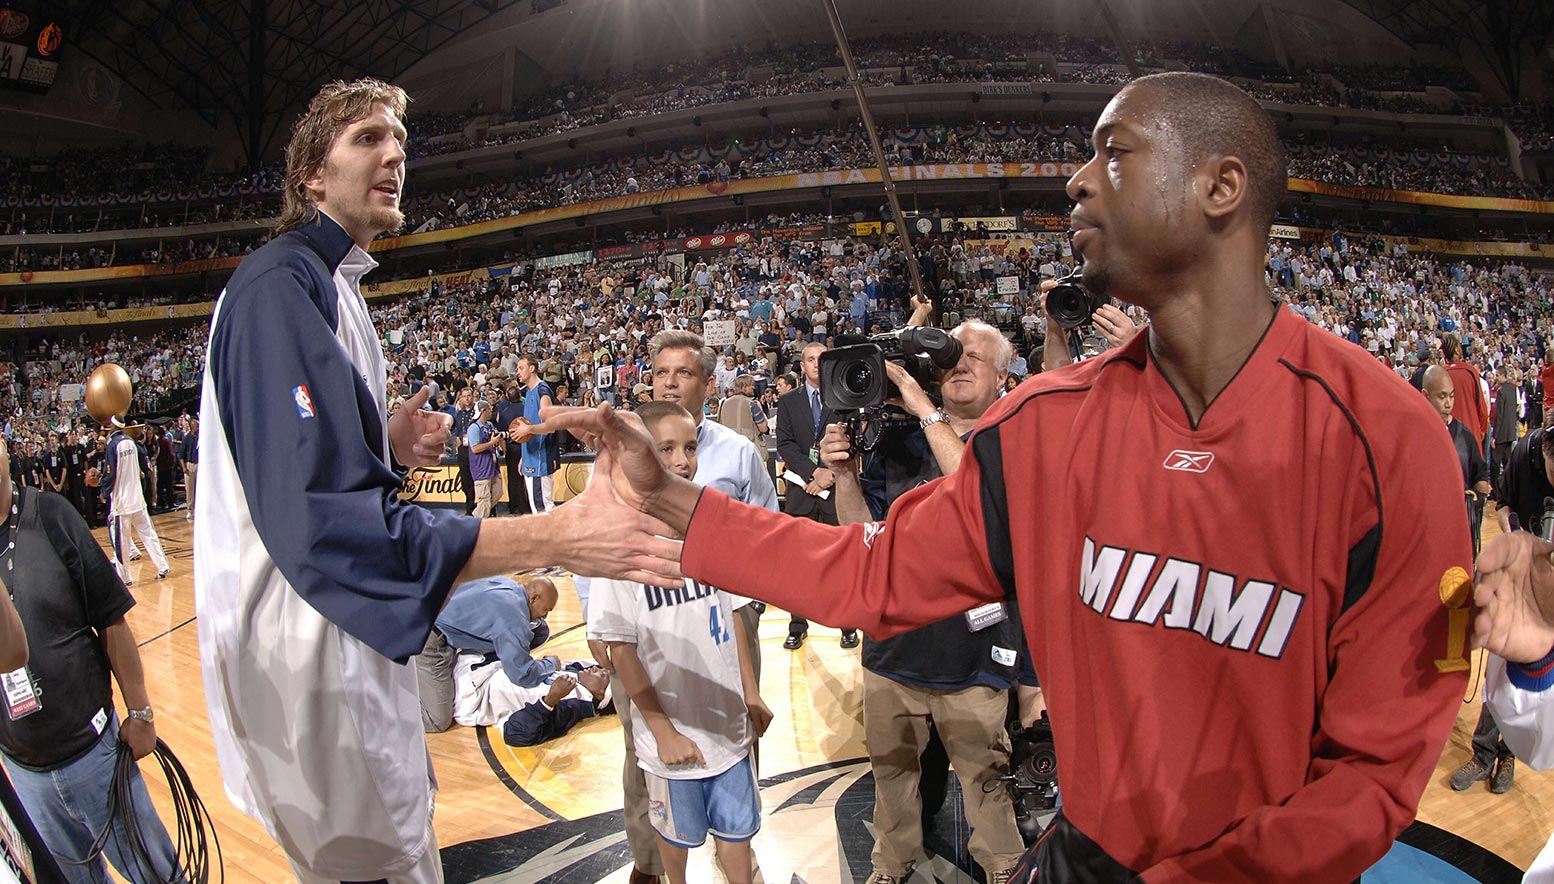 Dwayne Wade shakes hands with Dirk Nowitzki following the 2006 NBA Finals